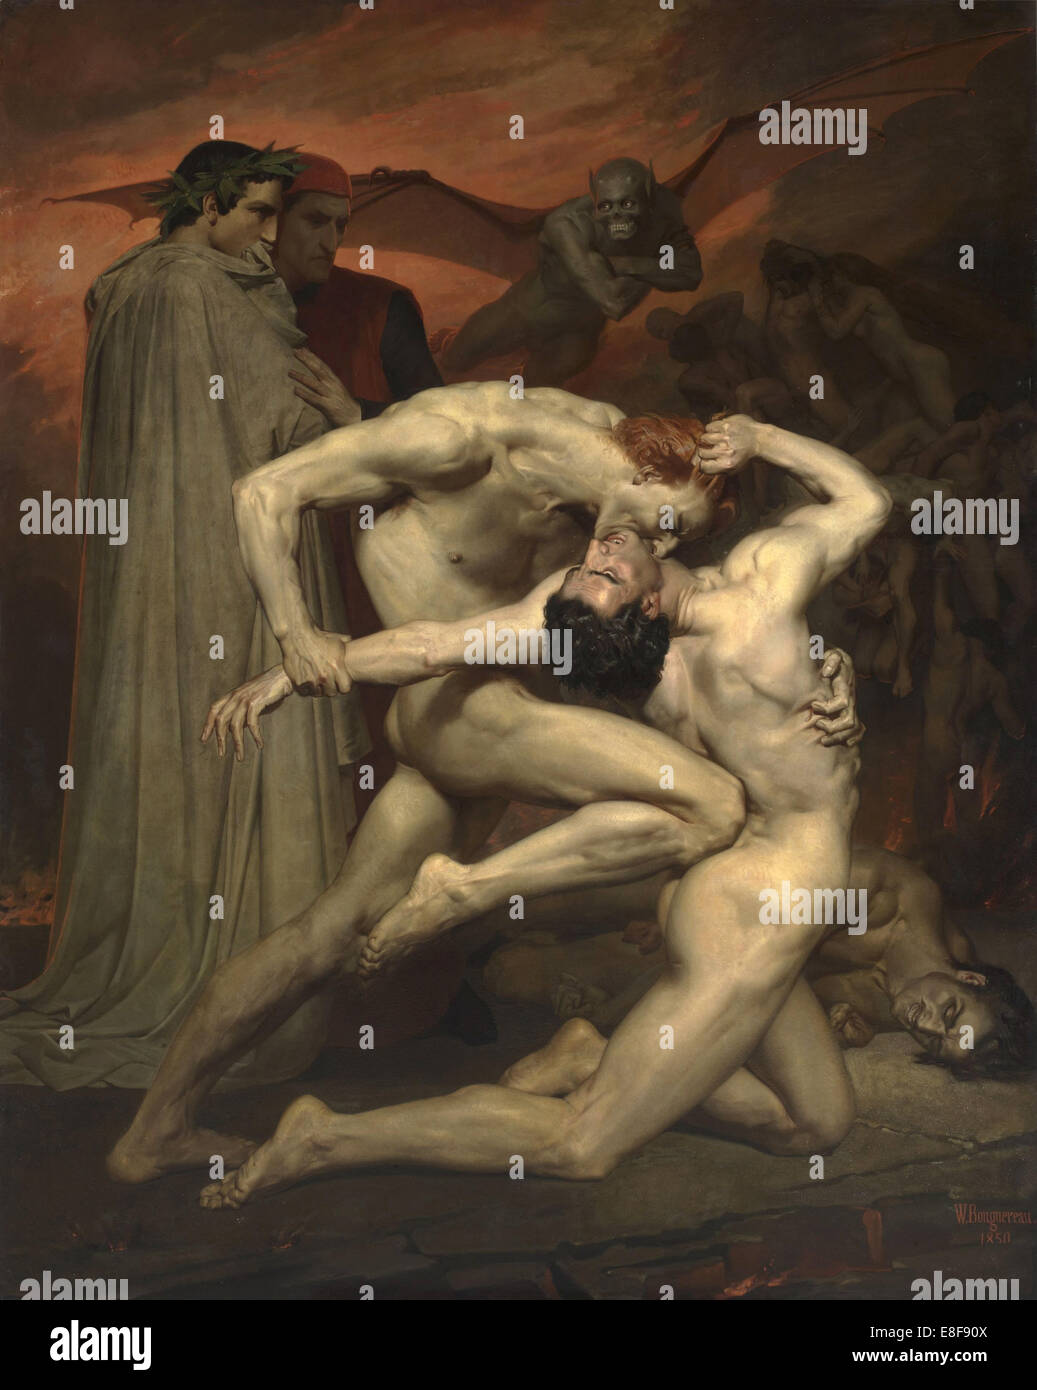 Dante e Virgilio nell'inferno. Artista: Bouguereau, William-Adolphe (1825-1905) Foto Stock